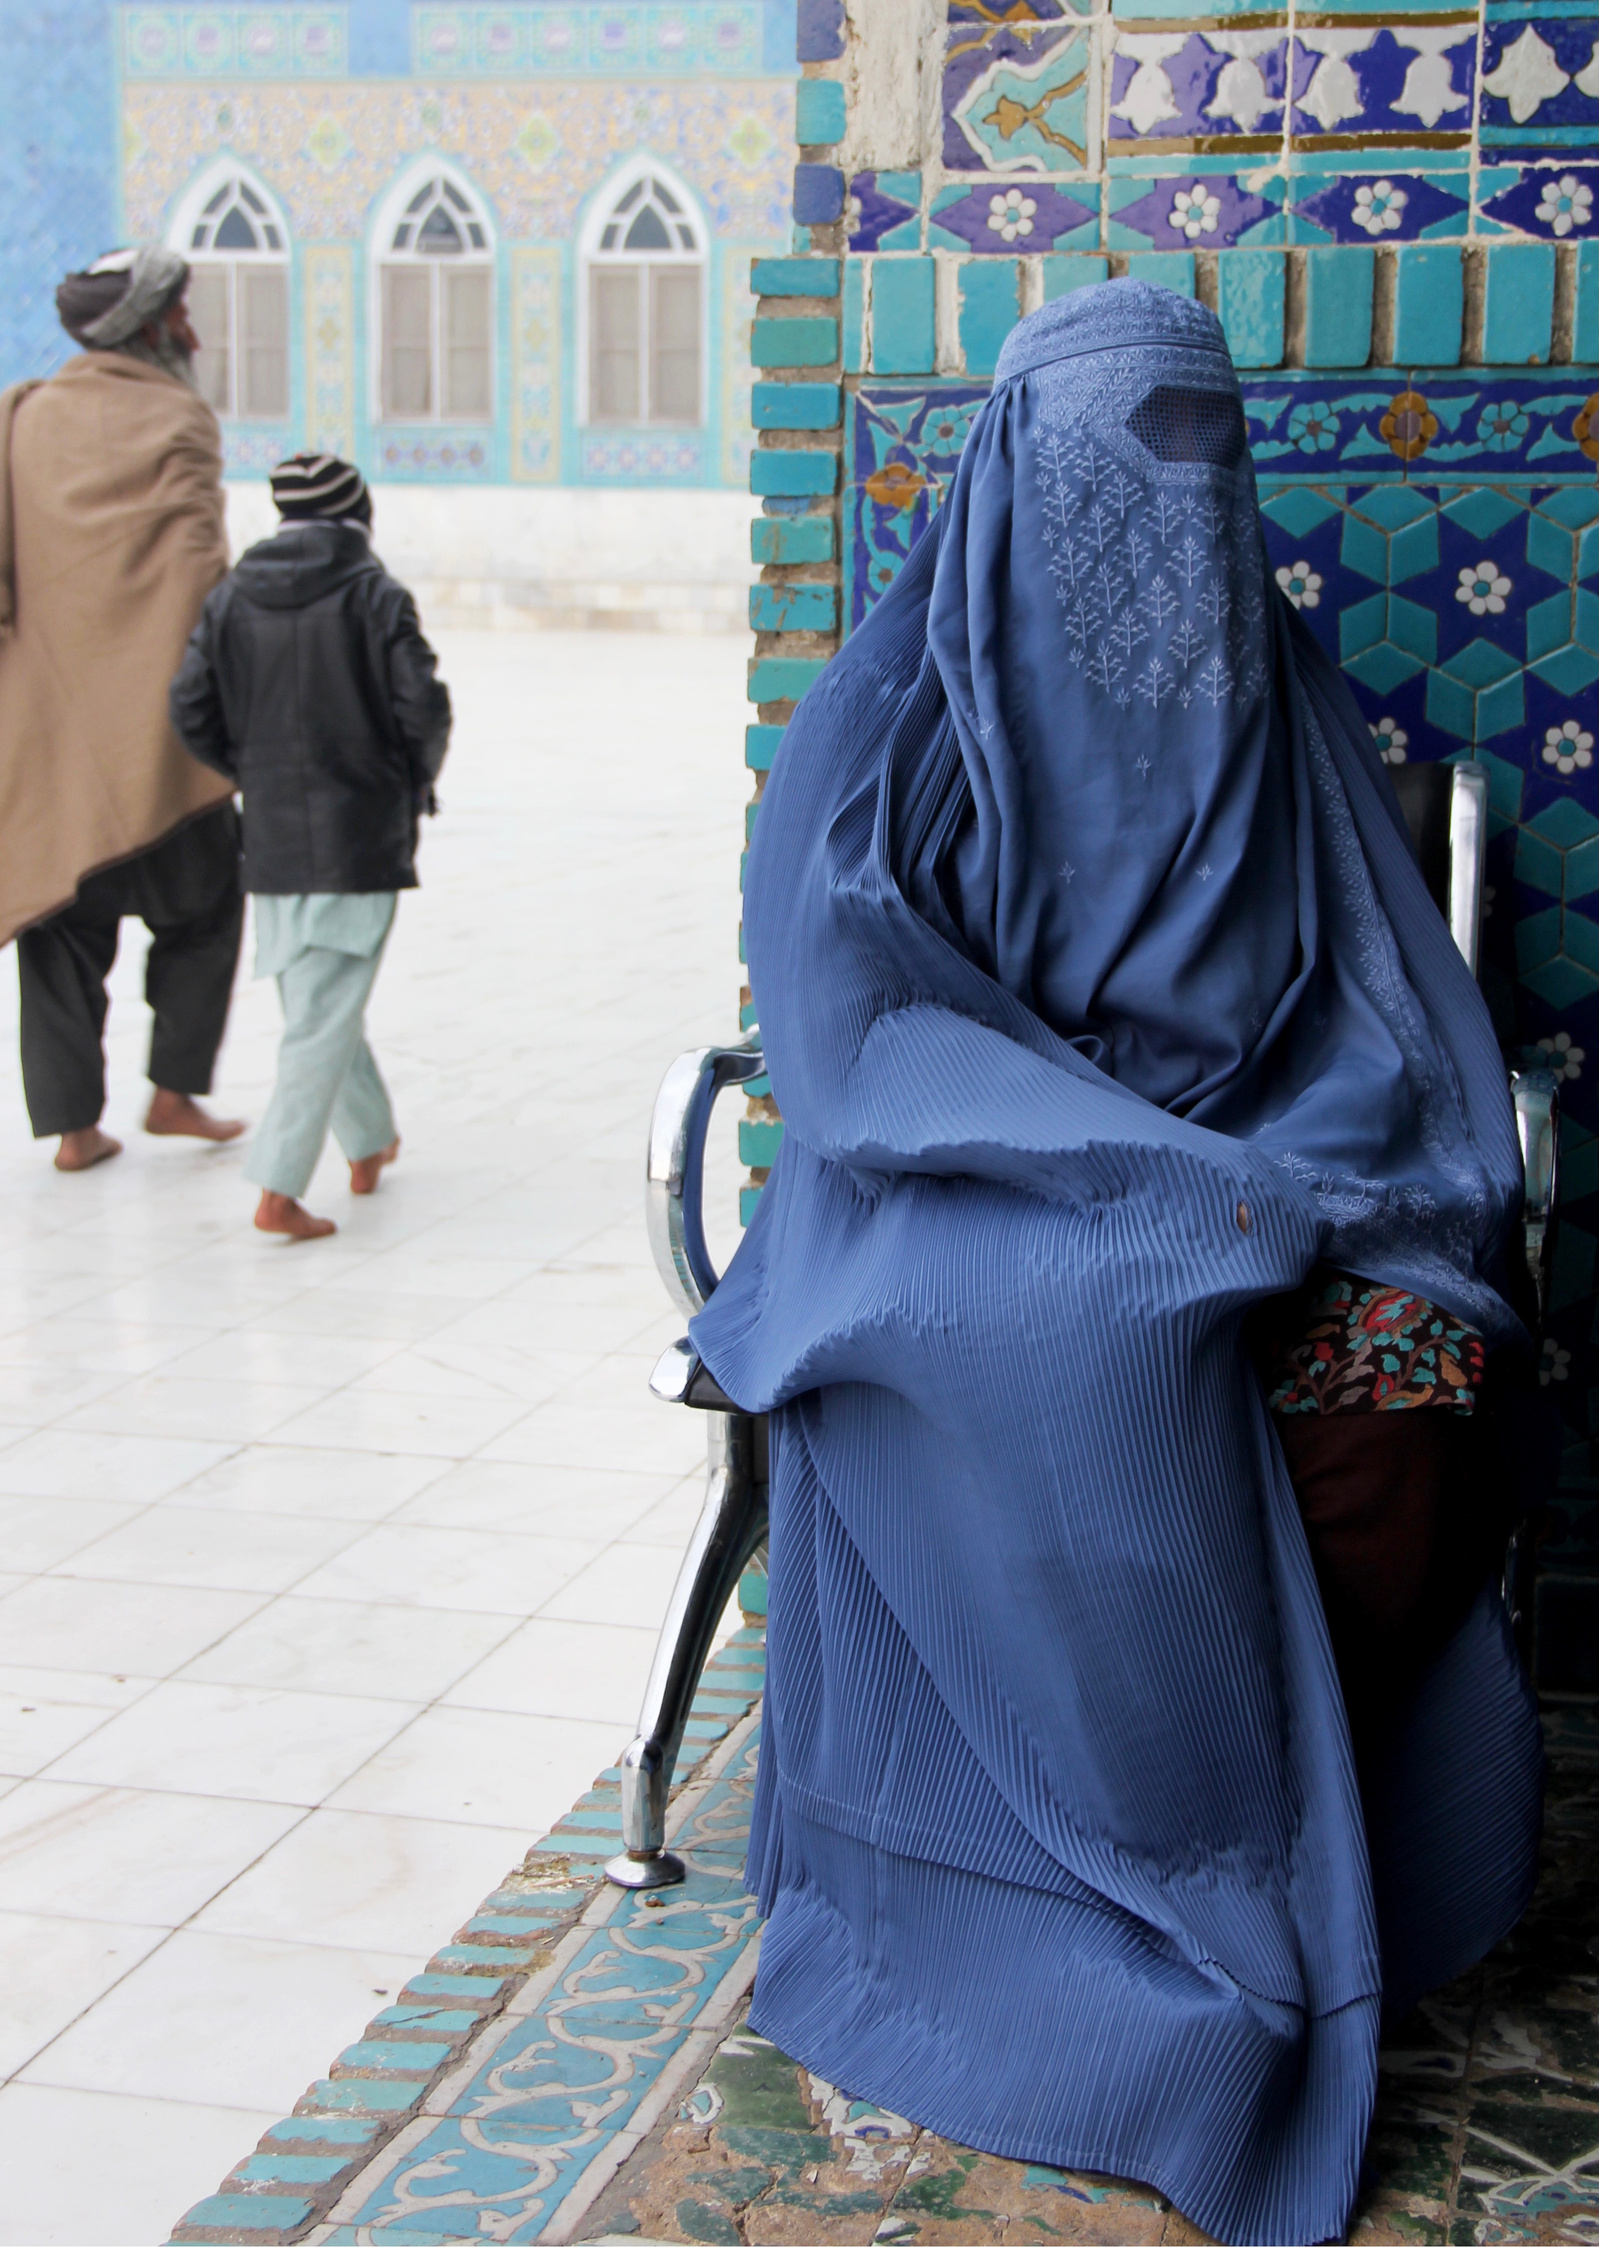 Afghanistan: My Home